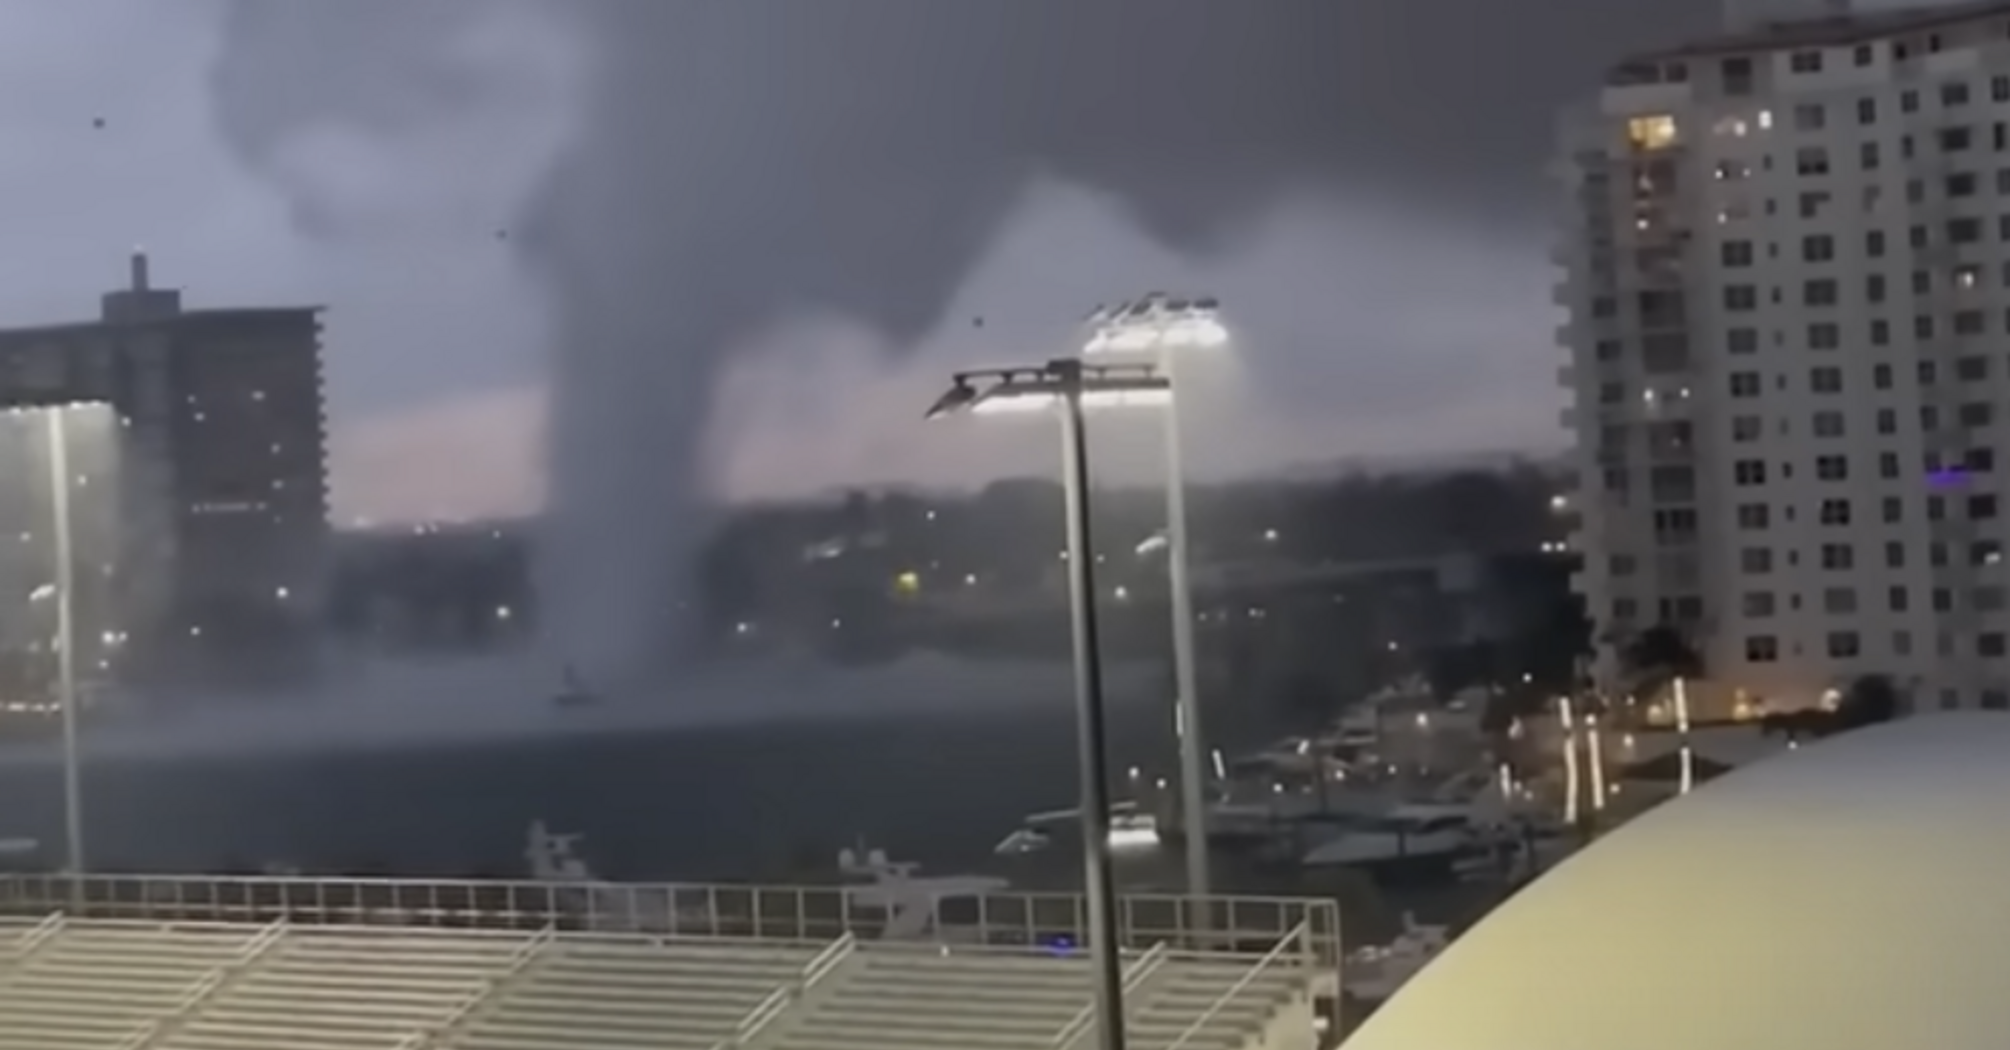 A powerful tornado hit Florida, damaging homes and boats. Video